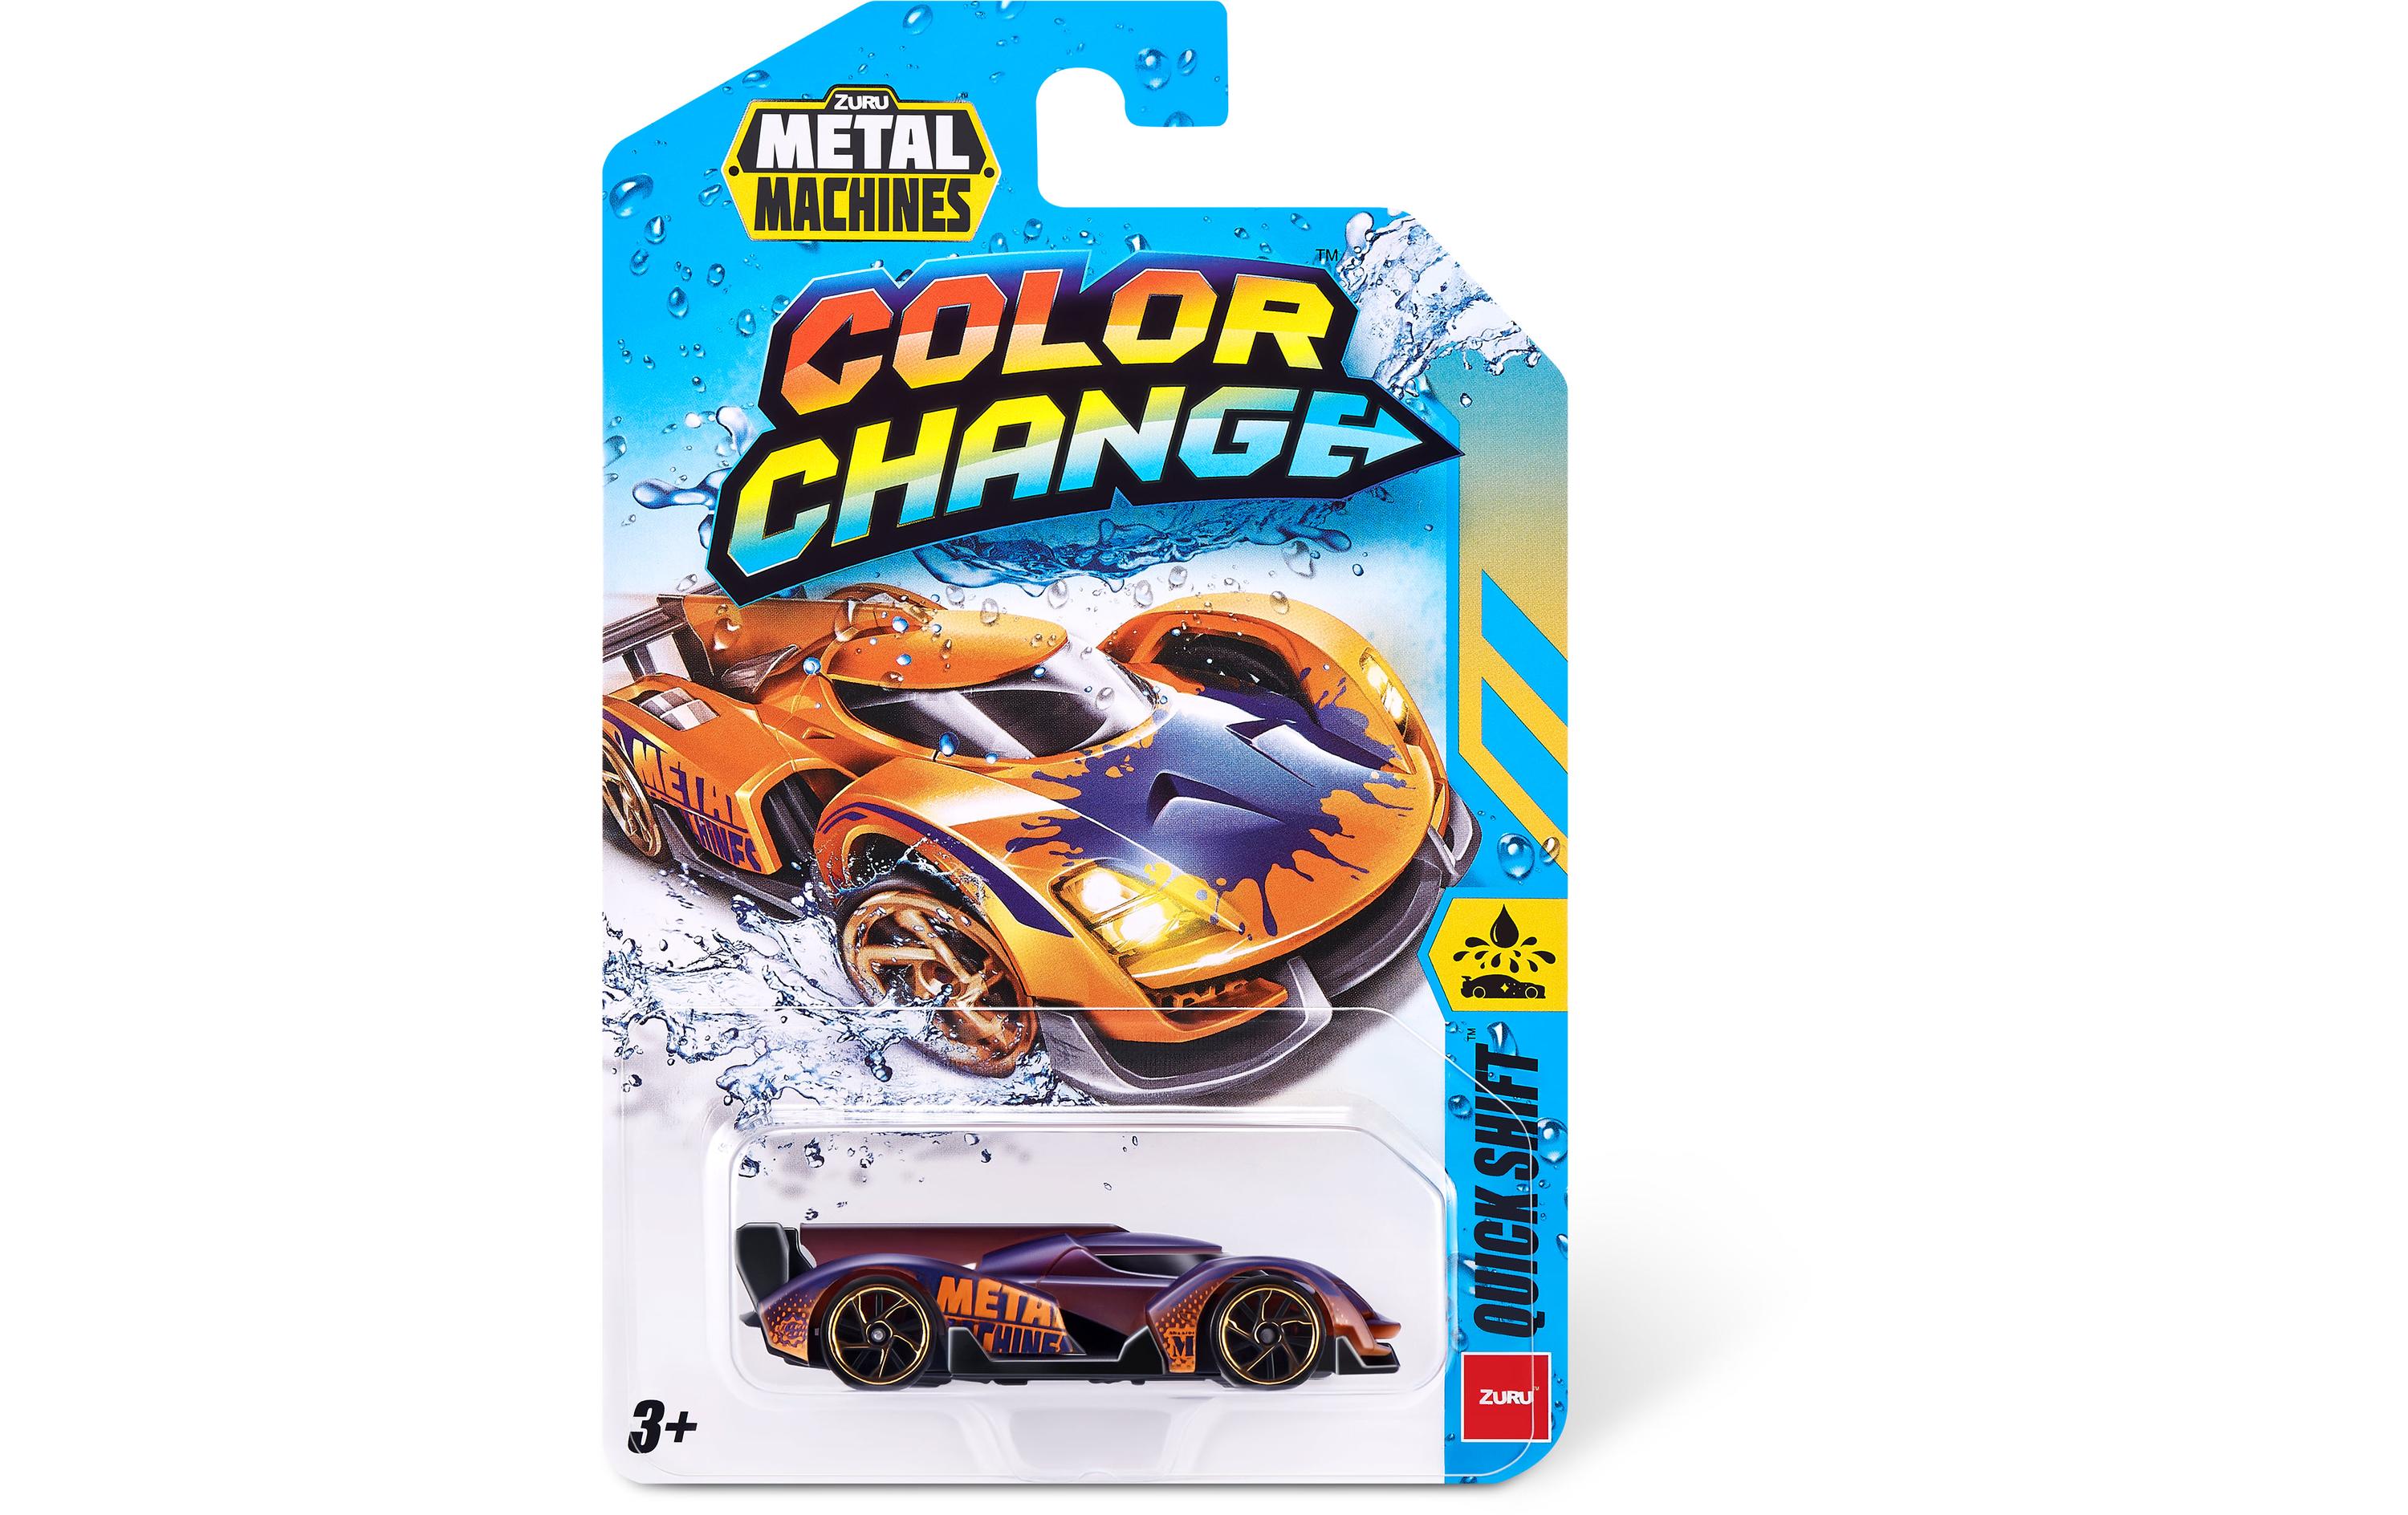 Metal Machines Metal Machines: Color Shifters 1er-Pack assortiert